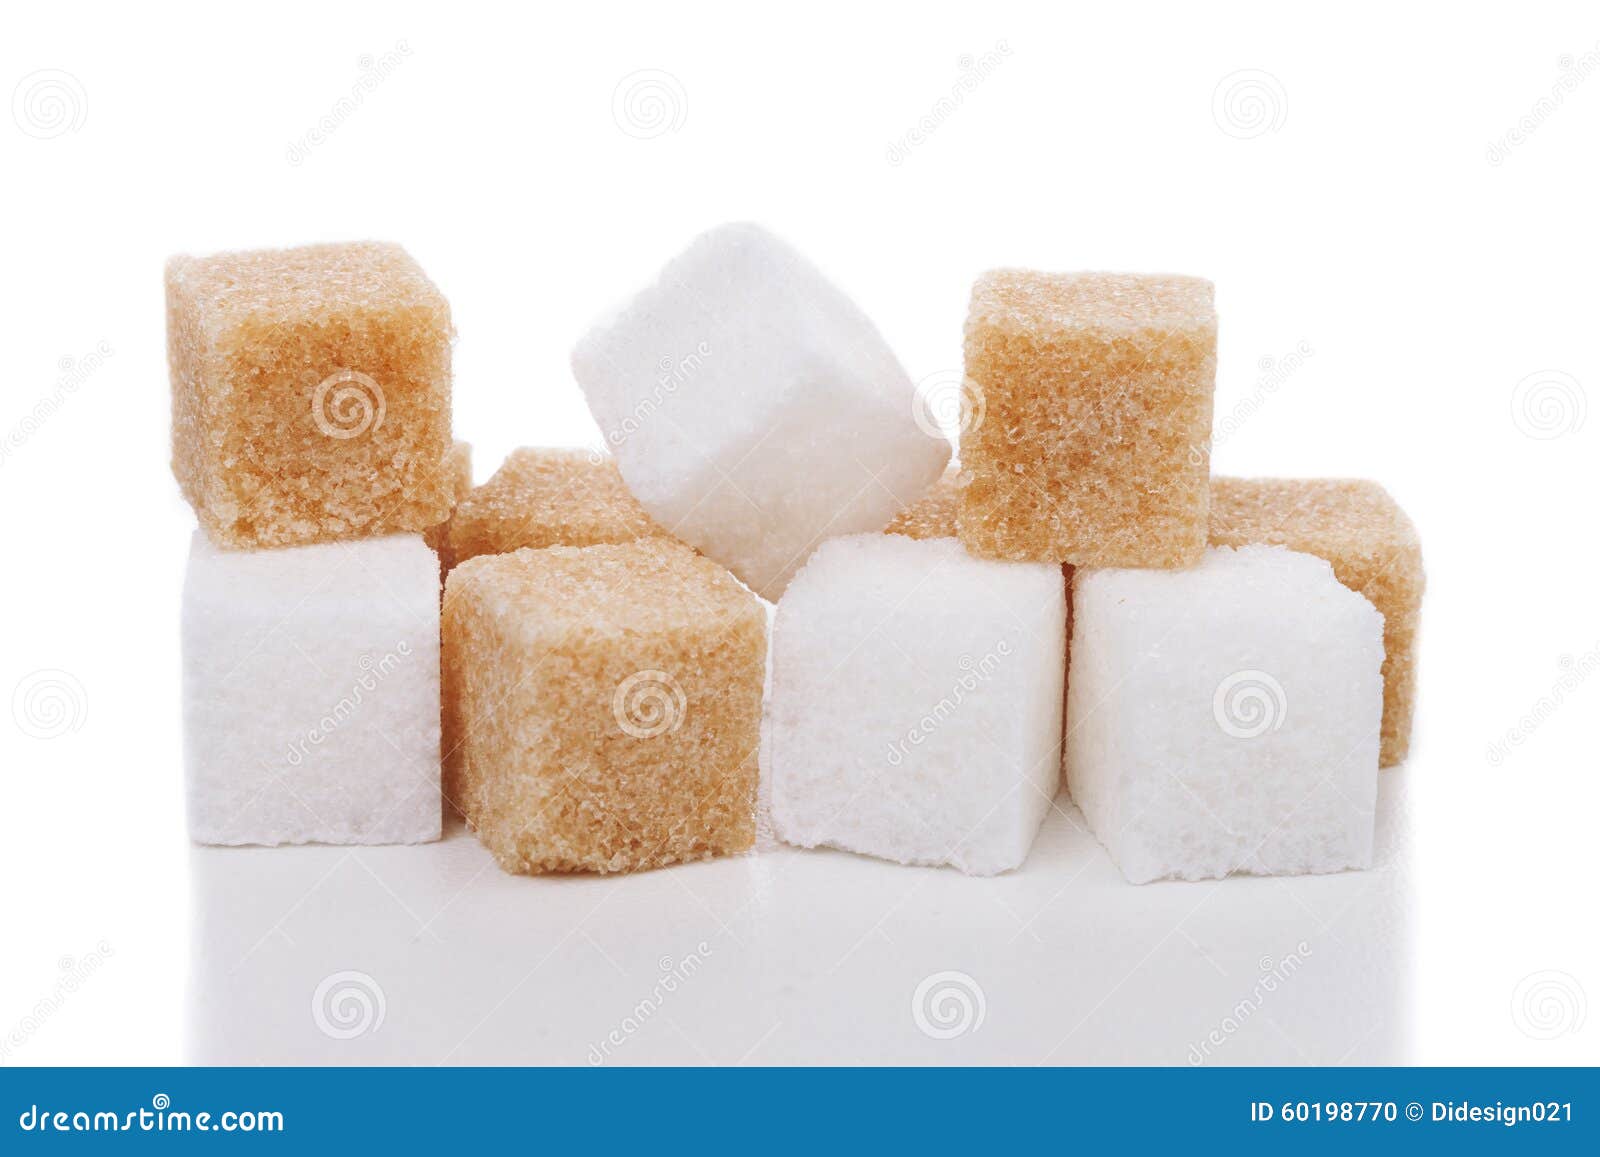 Hot and lovely sugar. Белый и коричневый сахар. Сахар кубики коричневый. Сахар белый и коричневый фото. Коричневый и белый сахар горки.